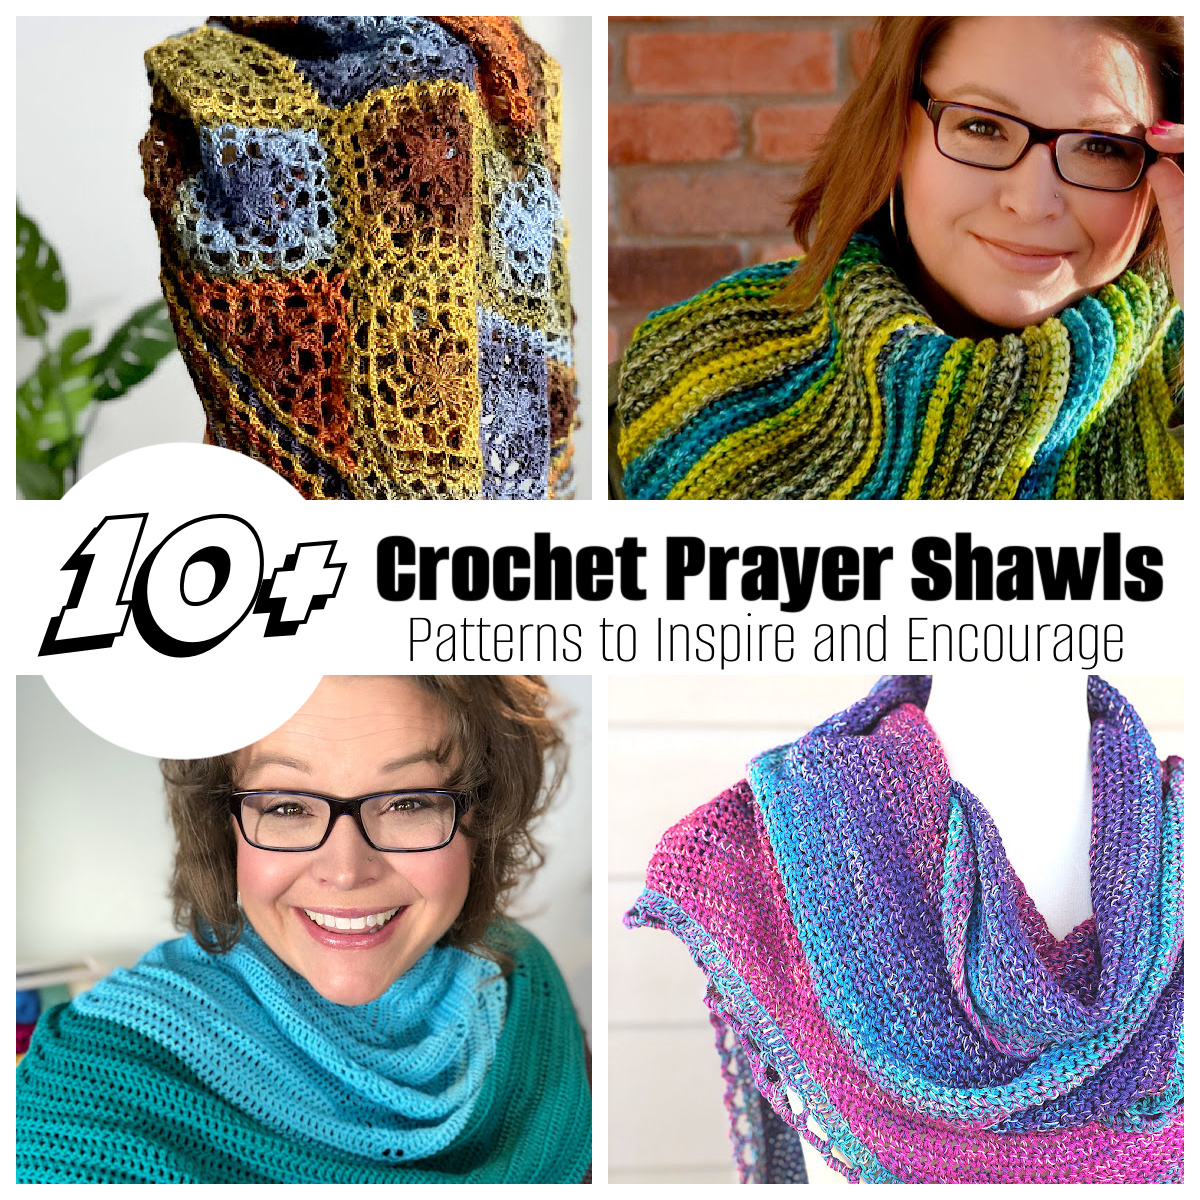 15+ Prayer Shawl Crochet Patterns (Free!)